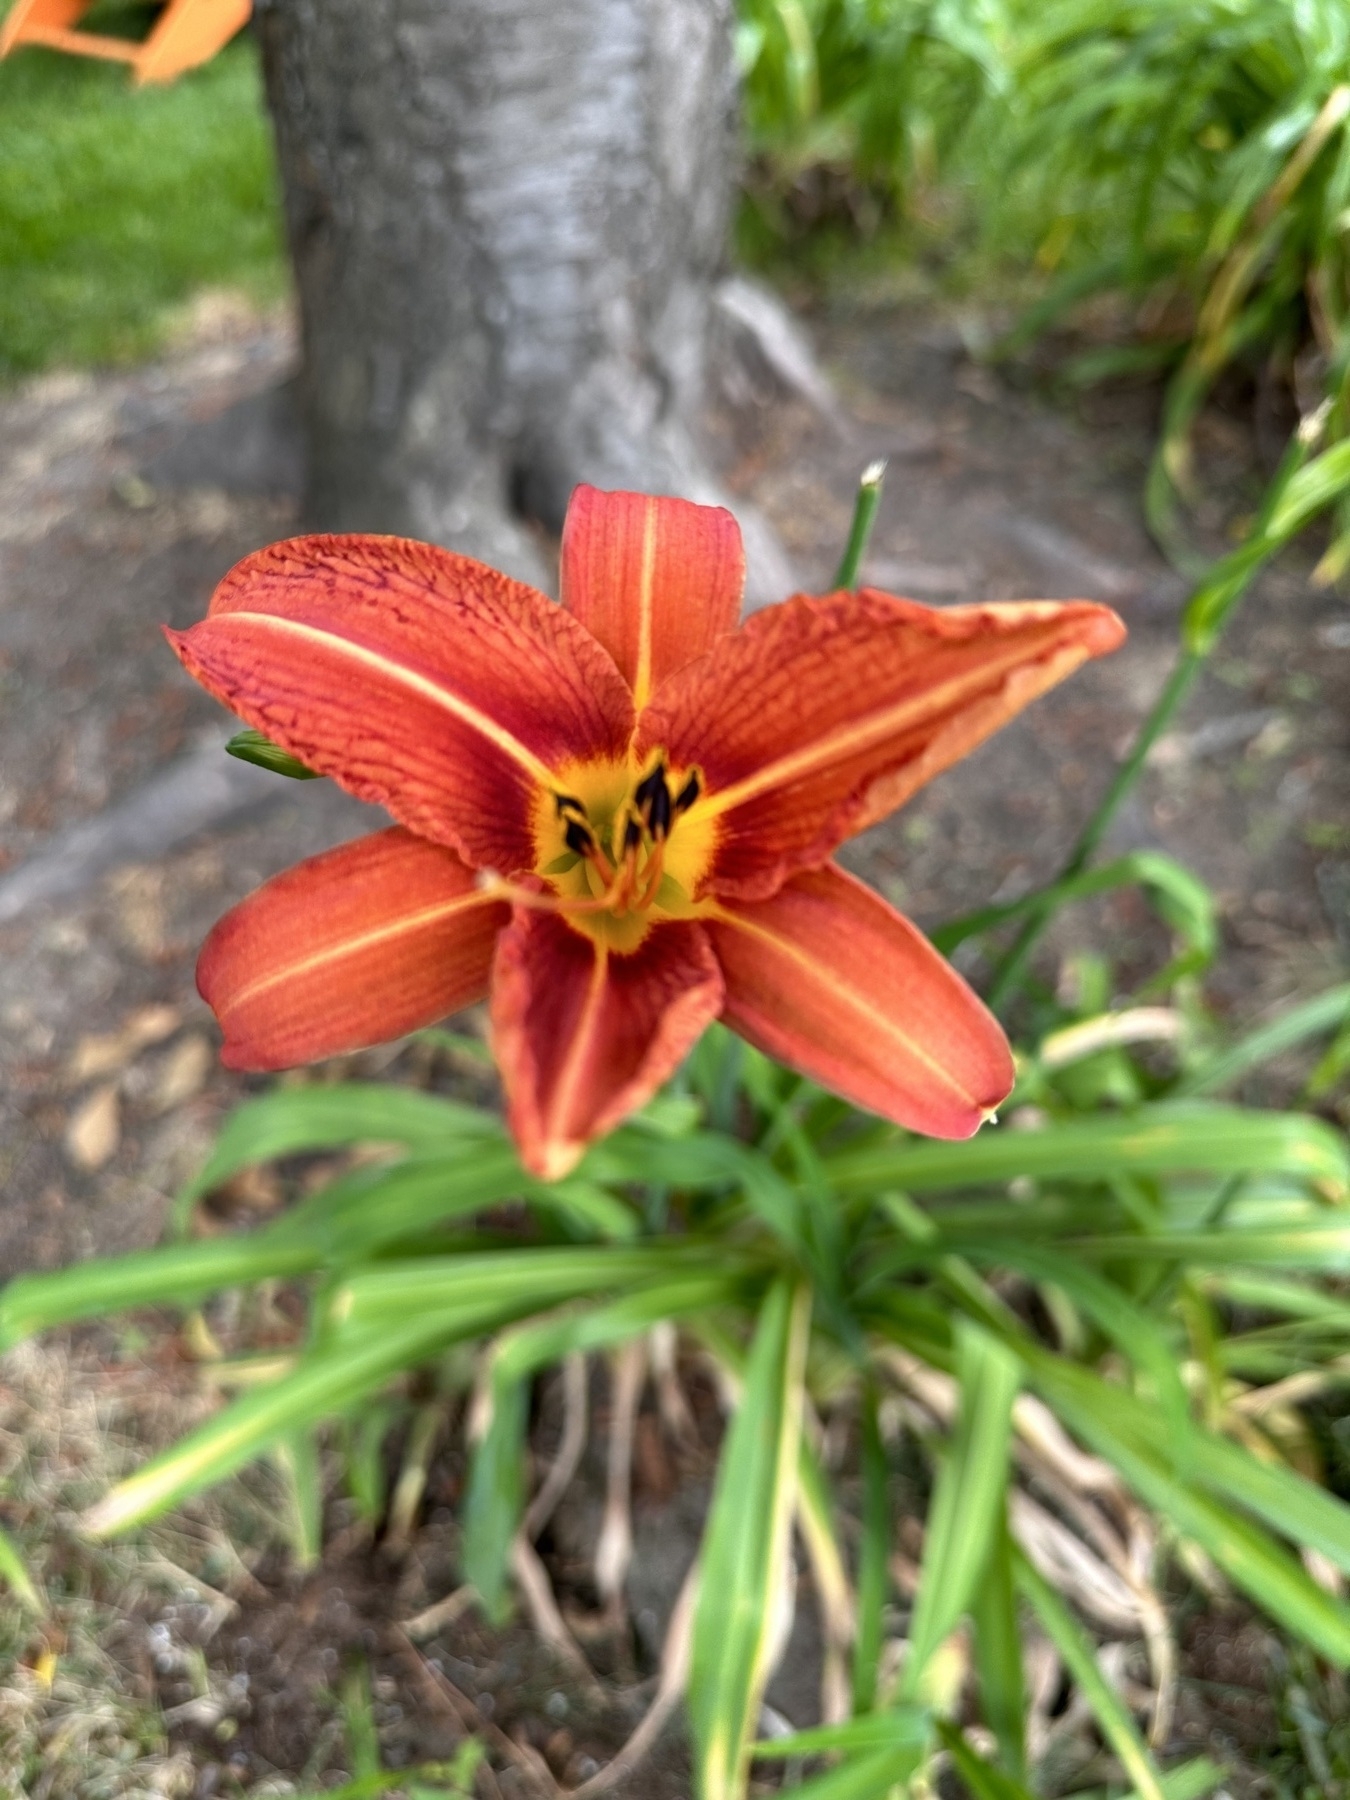 an fresh, orange-red lily bloom